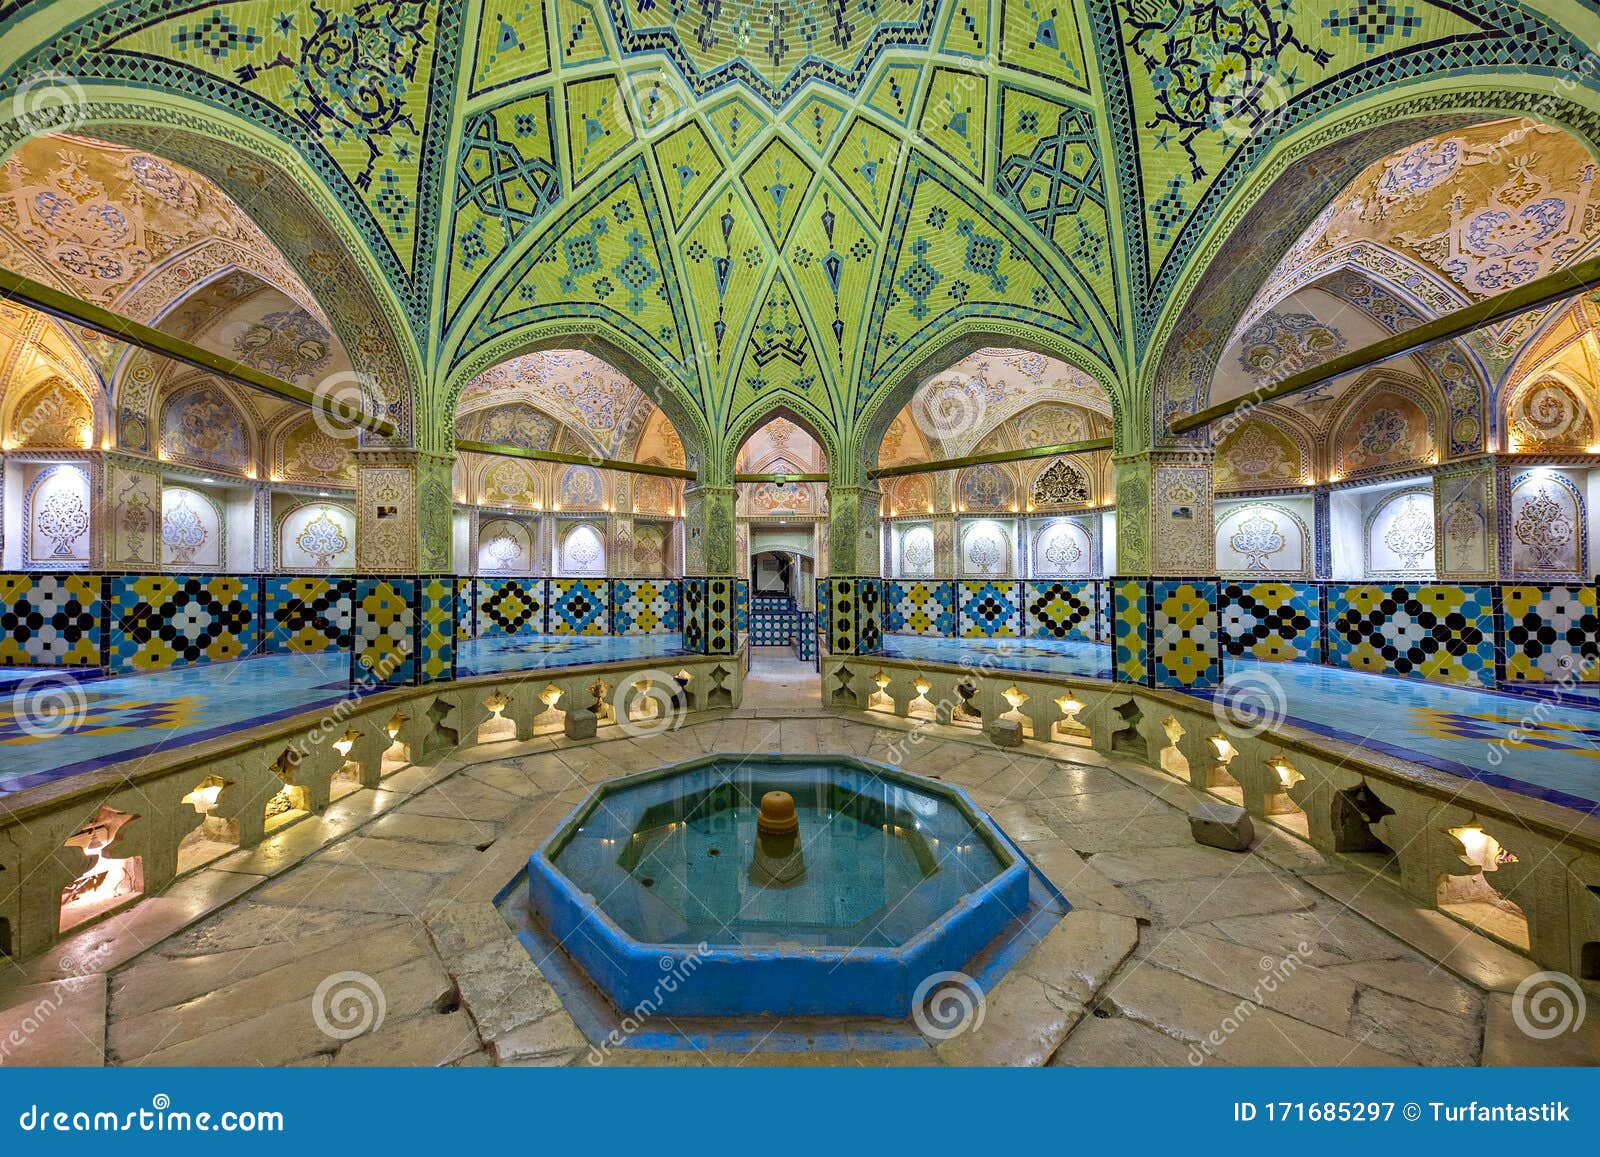 bath house in kashan, iran